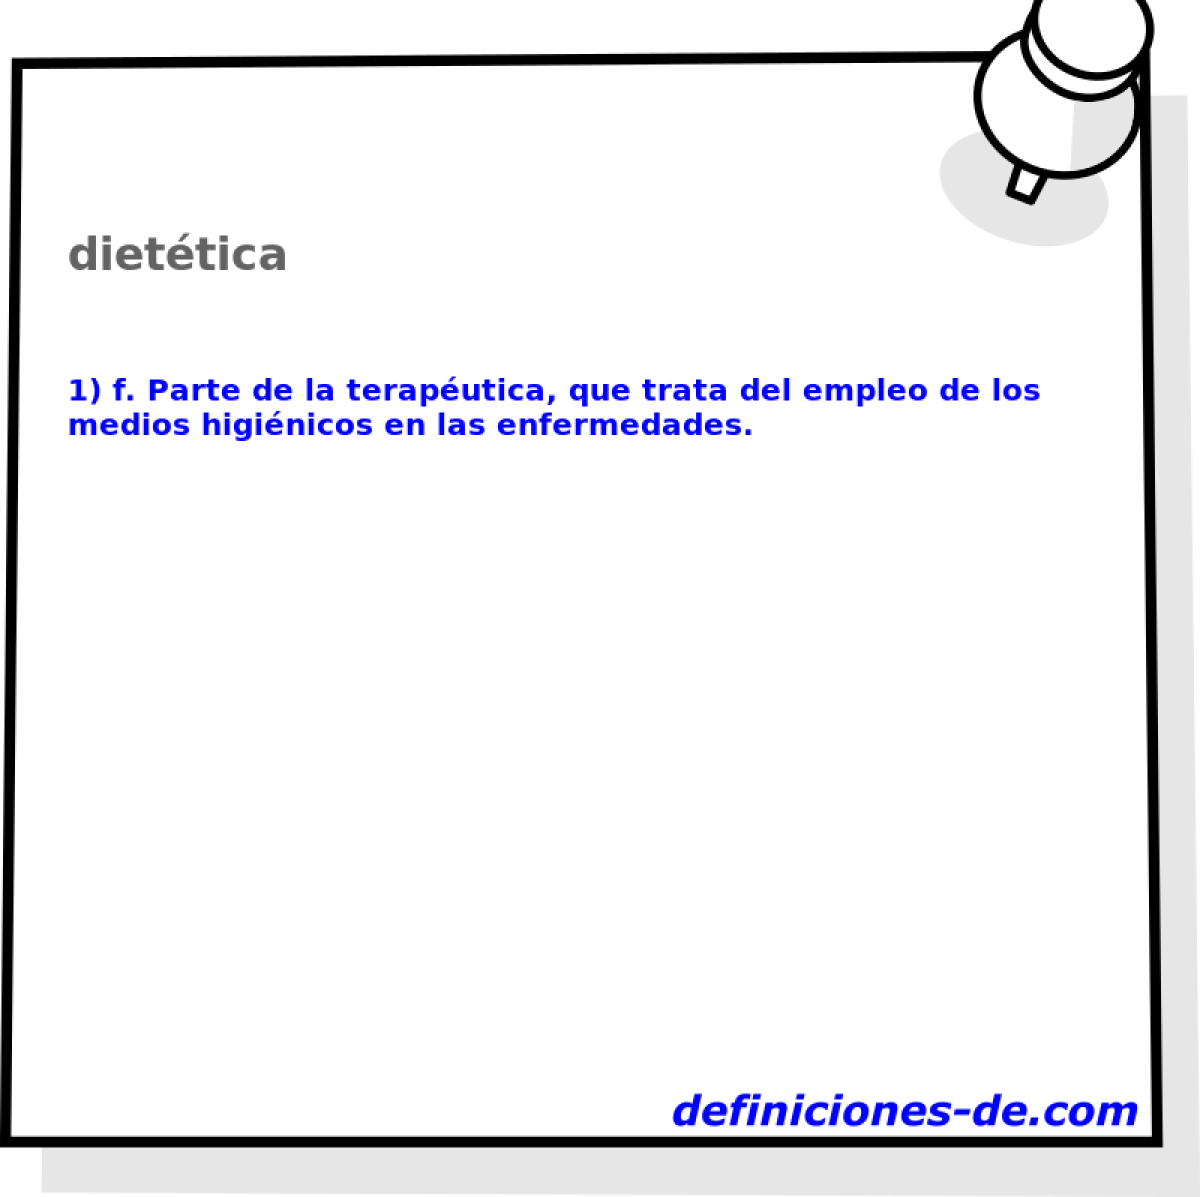 diettica 